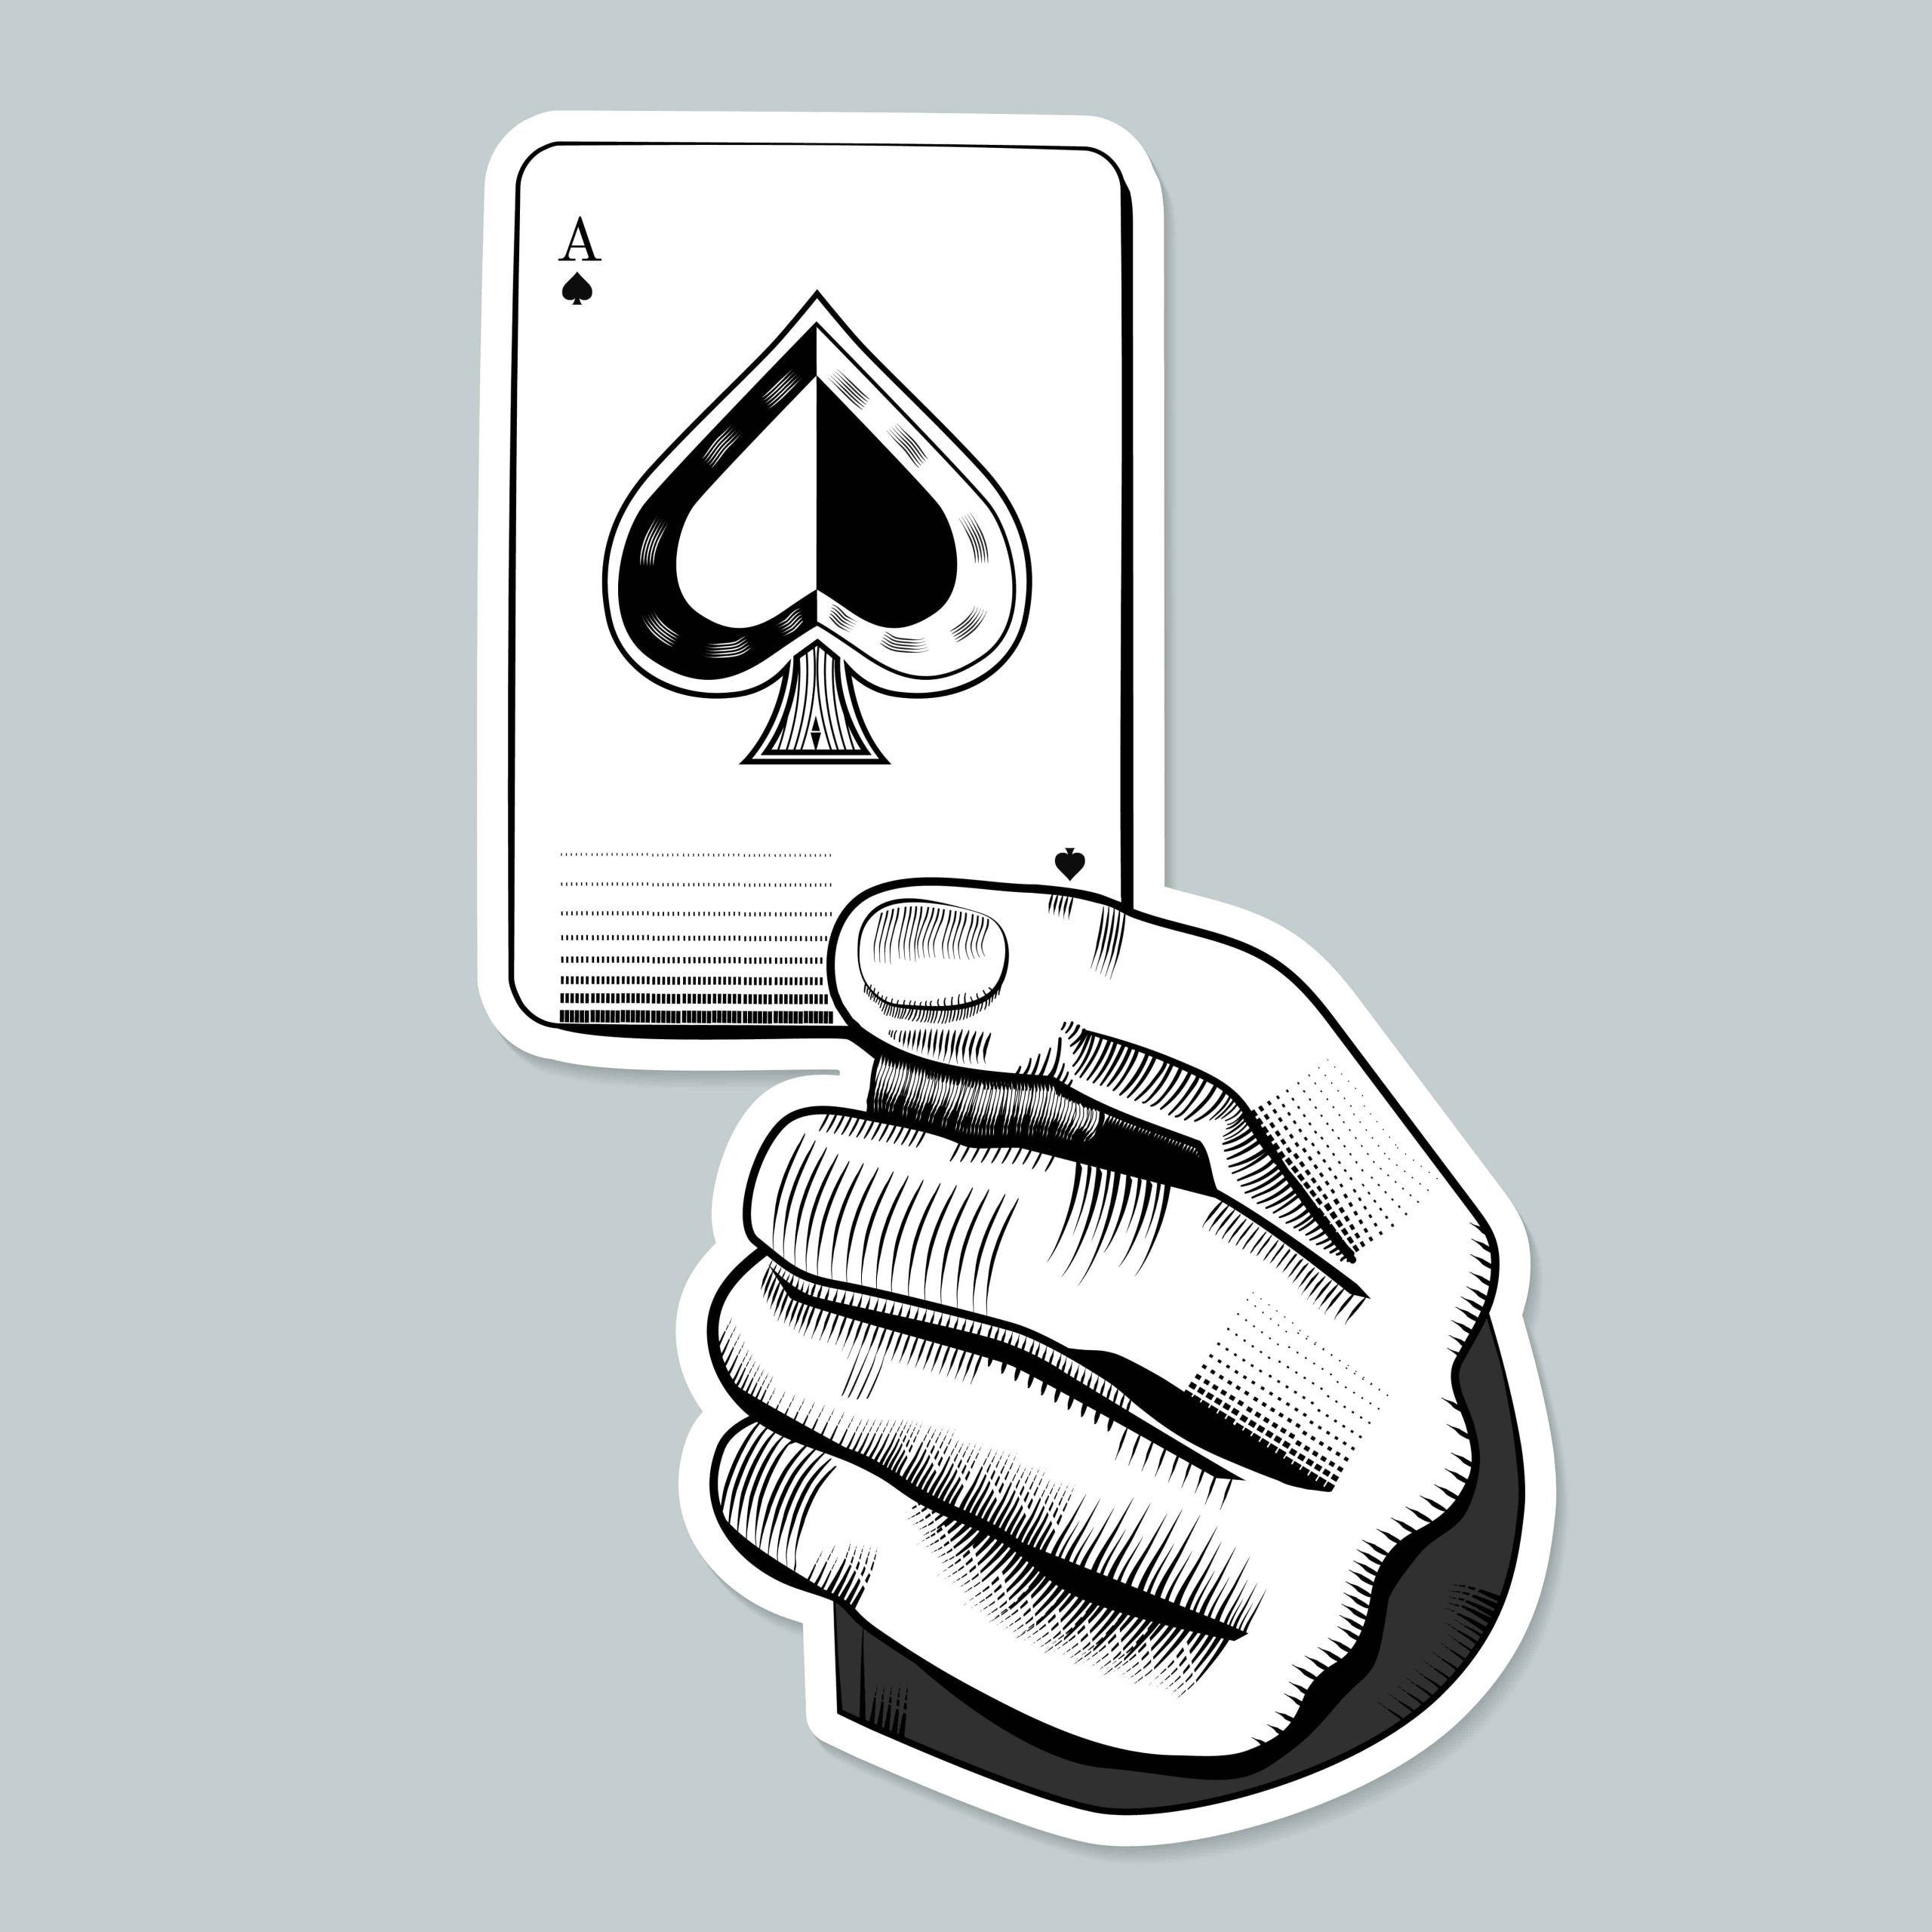 blackjack-odds